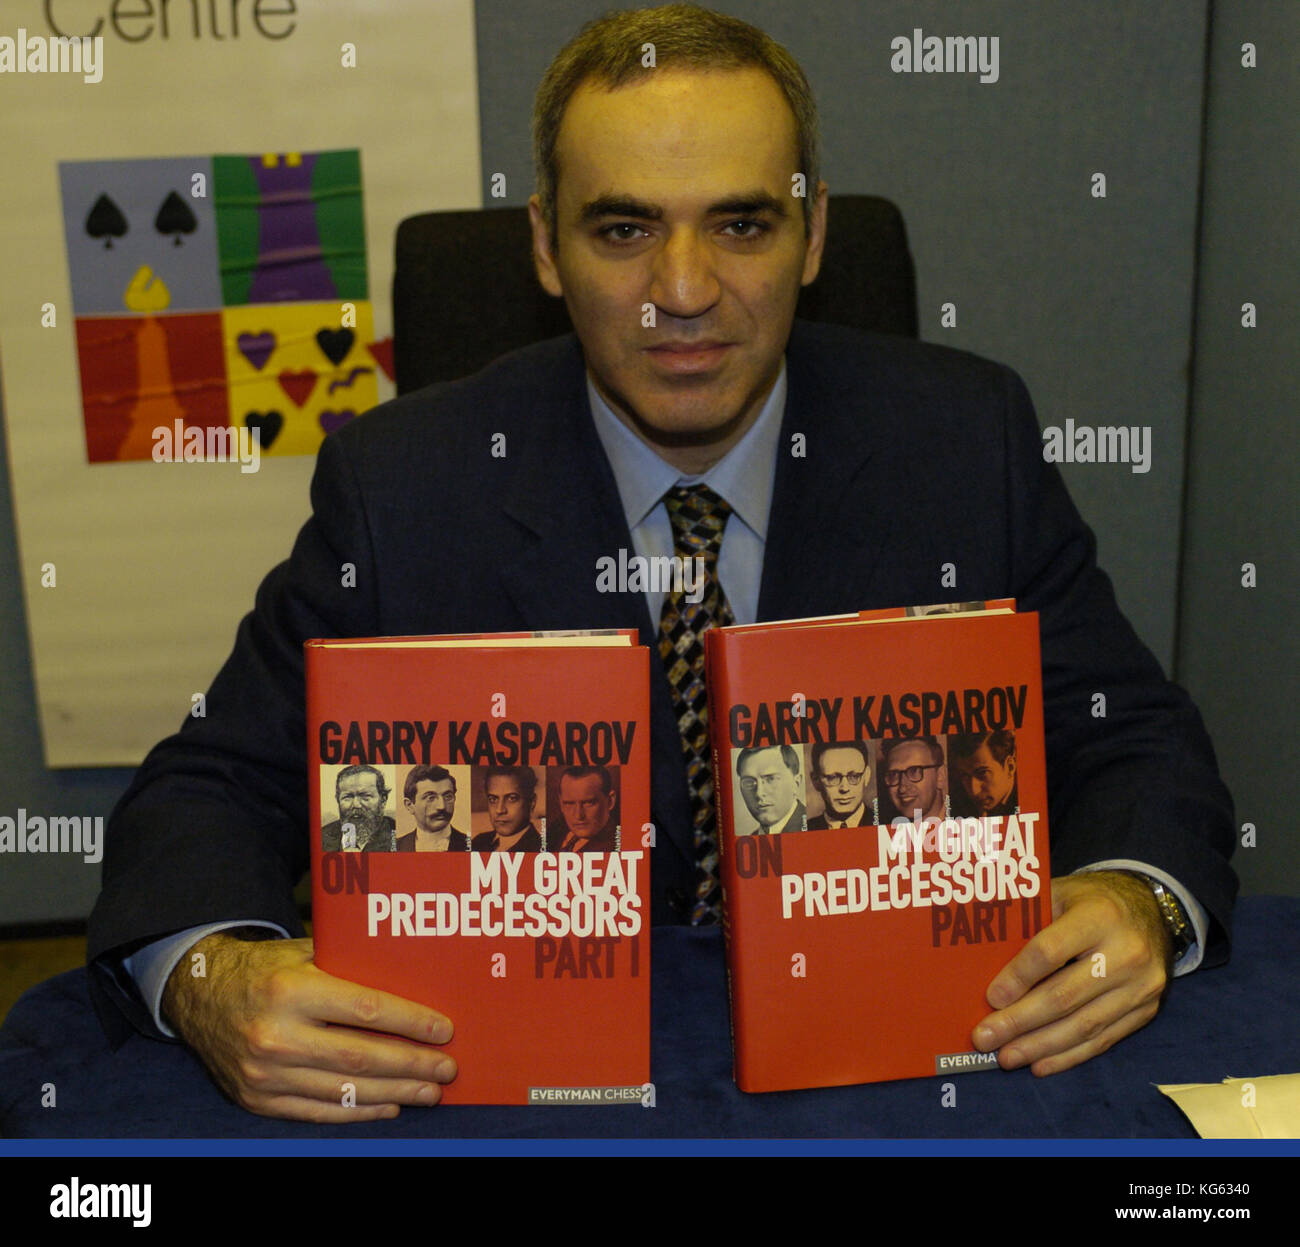 Meus Grandes Predecessores - volume 1 - Garry Kasparov